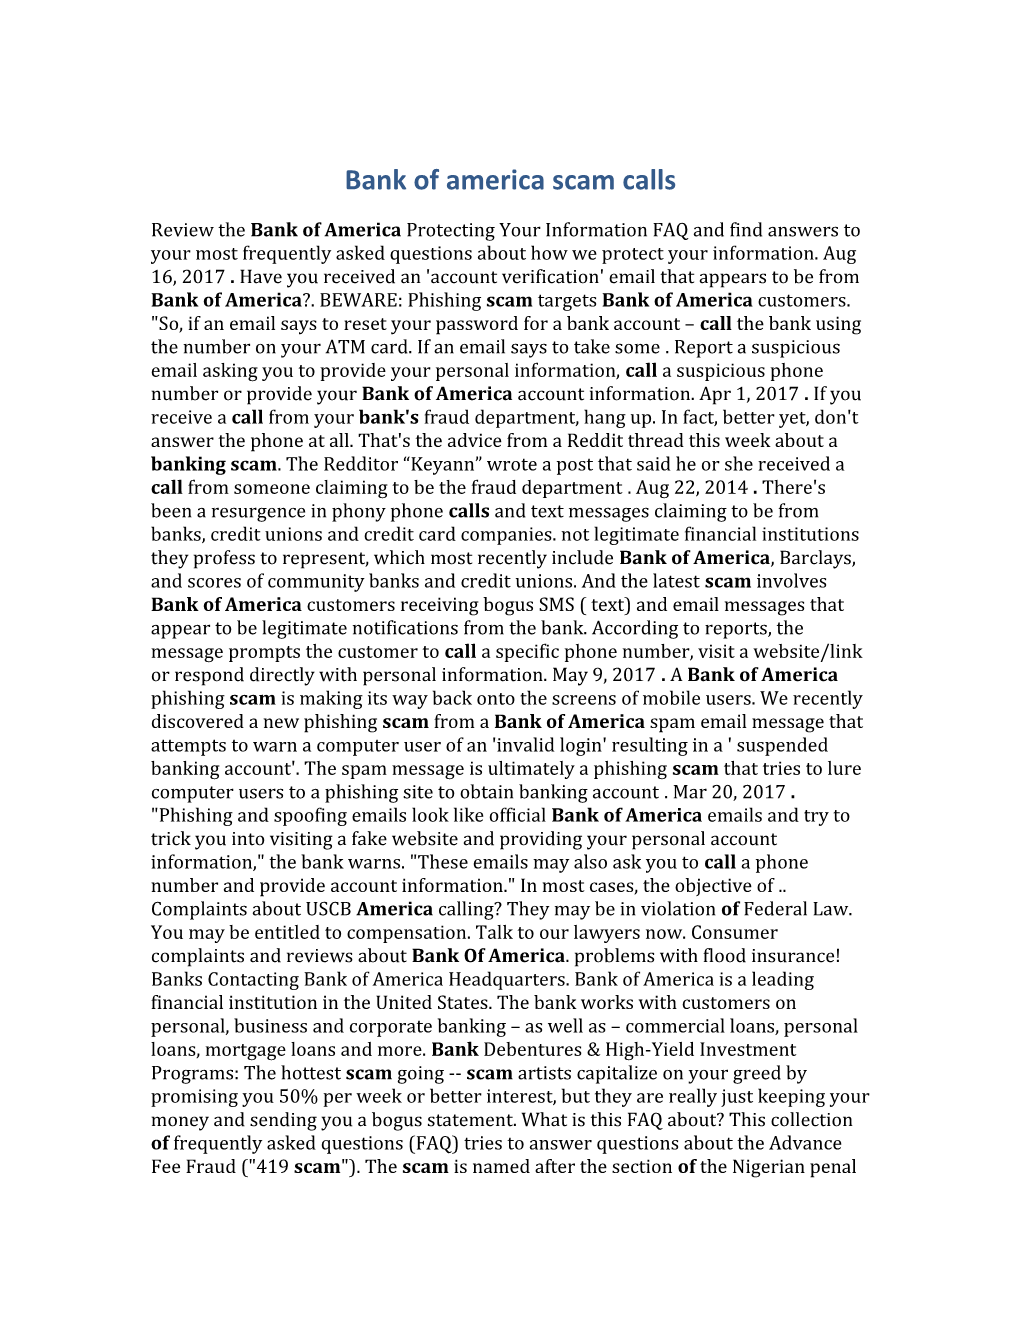 Bank of America Scam Calls